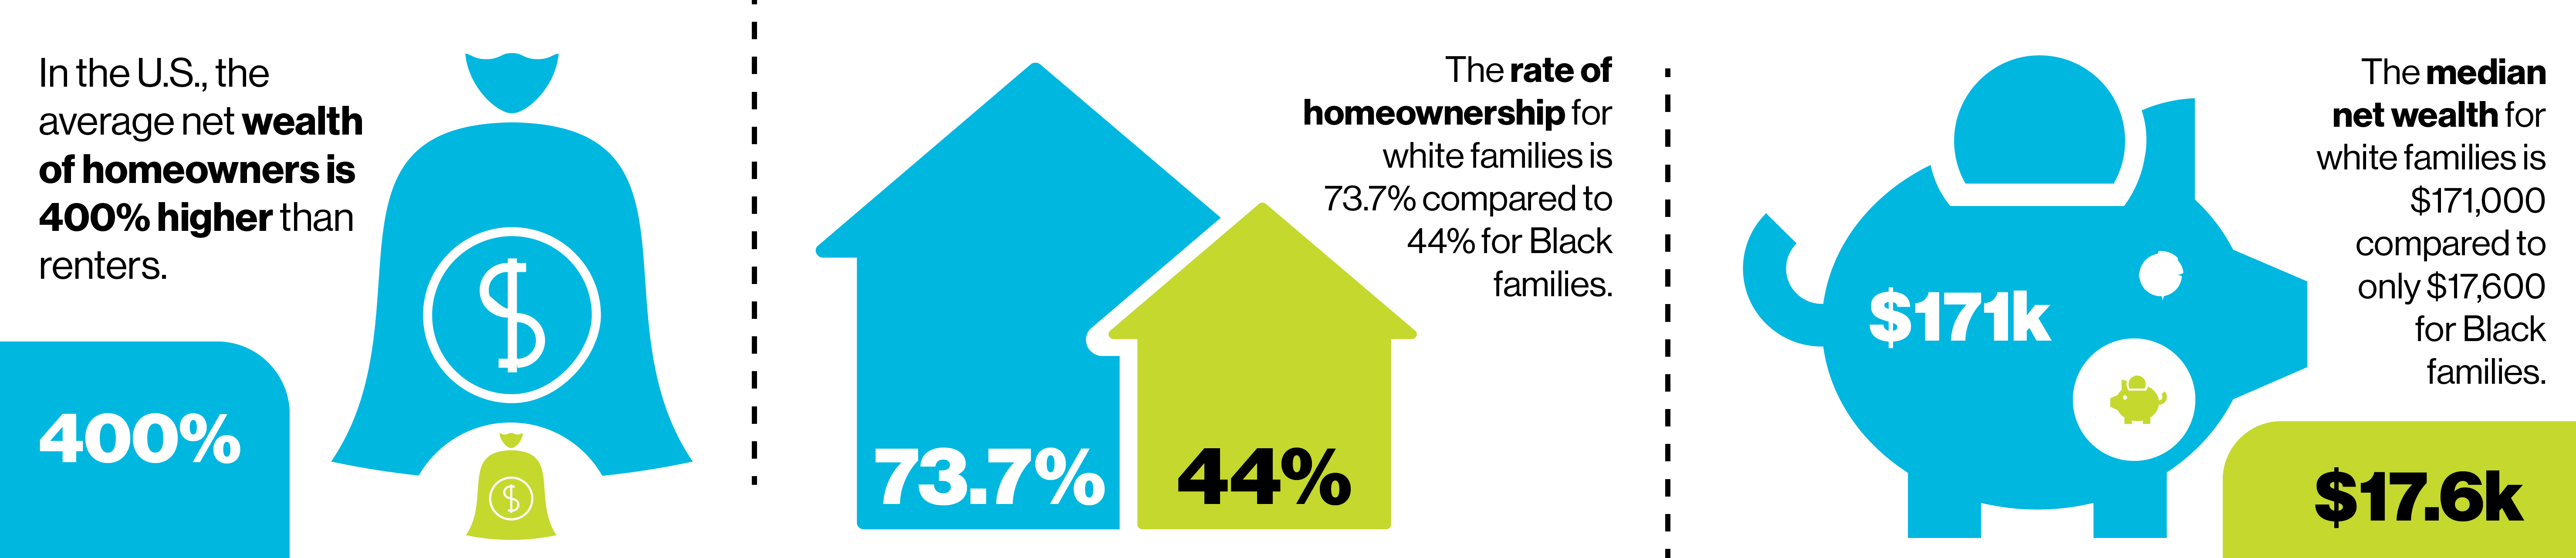 Homeownership disparities, Affordable Housing